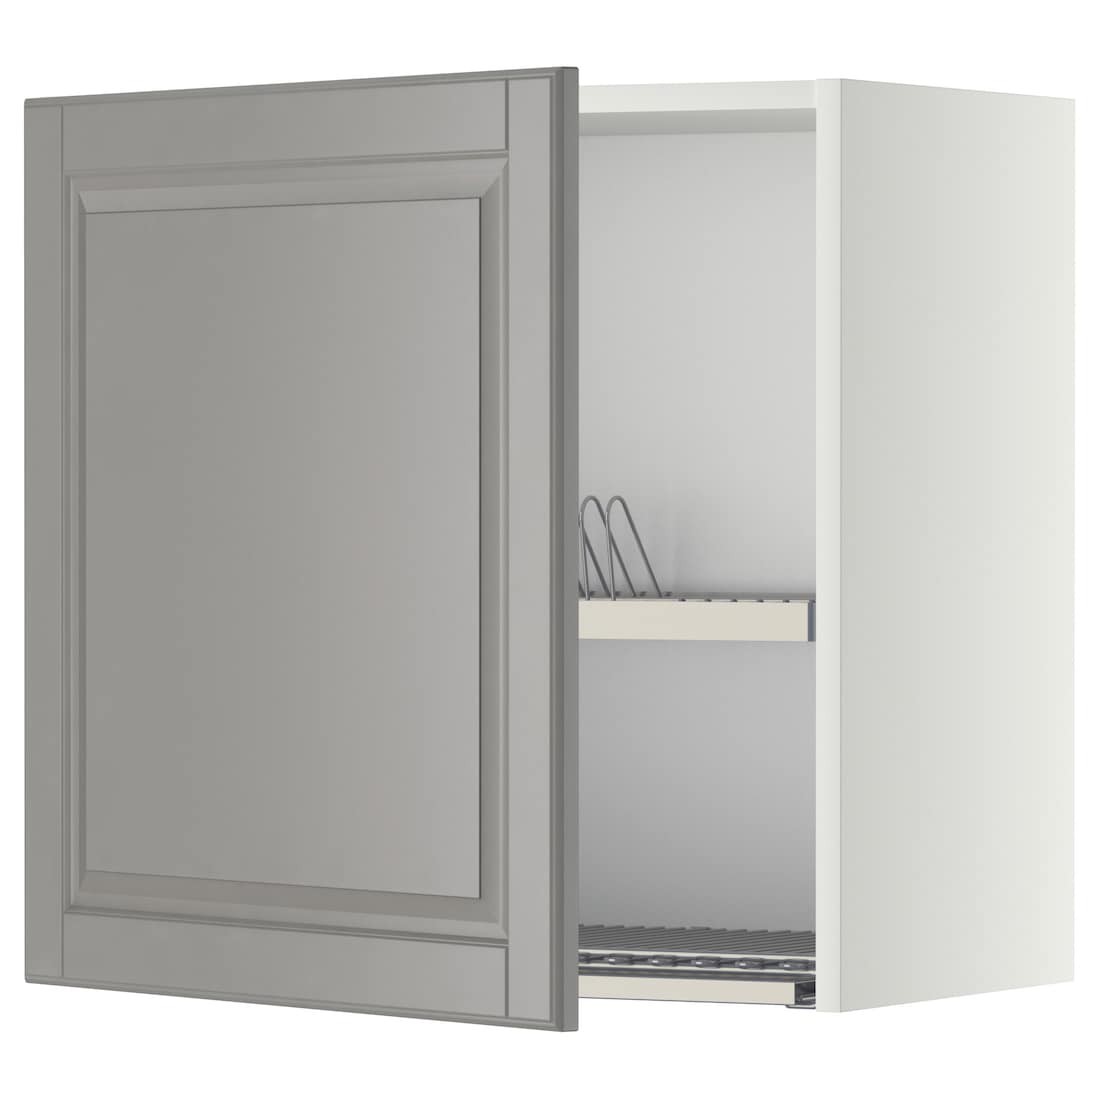 METOD МЕТОД Навесной шкаф с сушилкой, белый / Bodbyn серый, 60x60 см